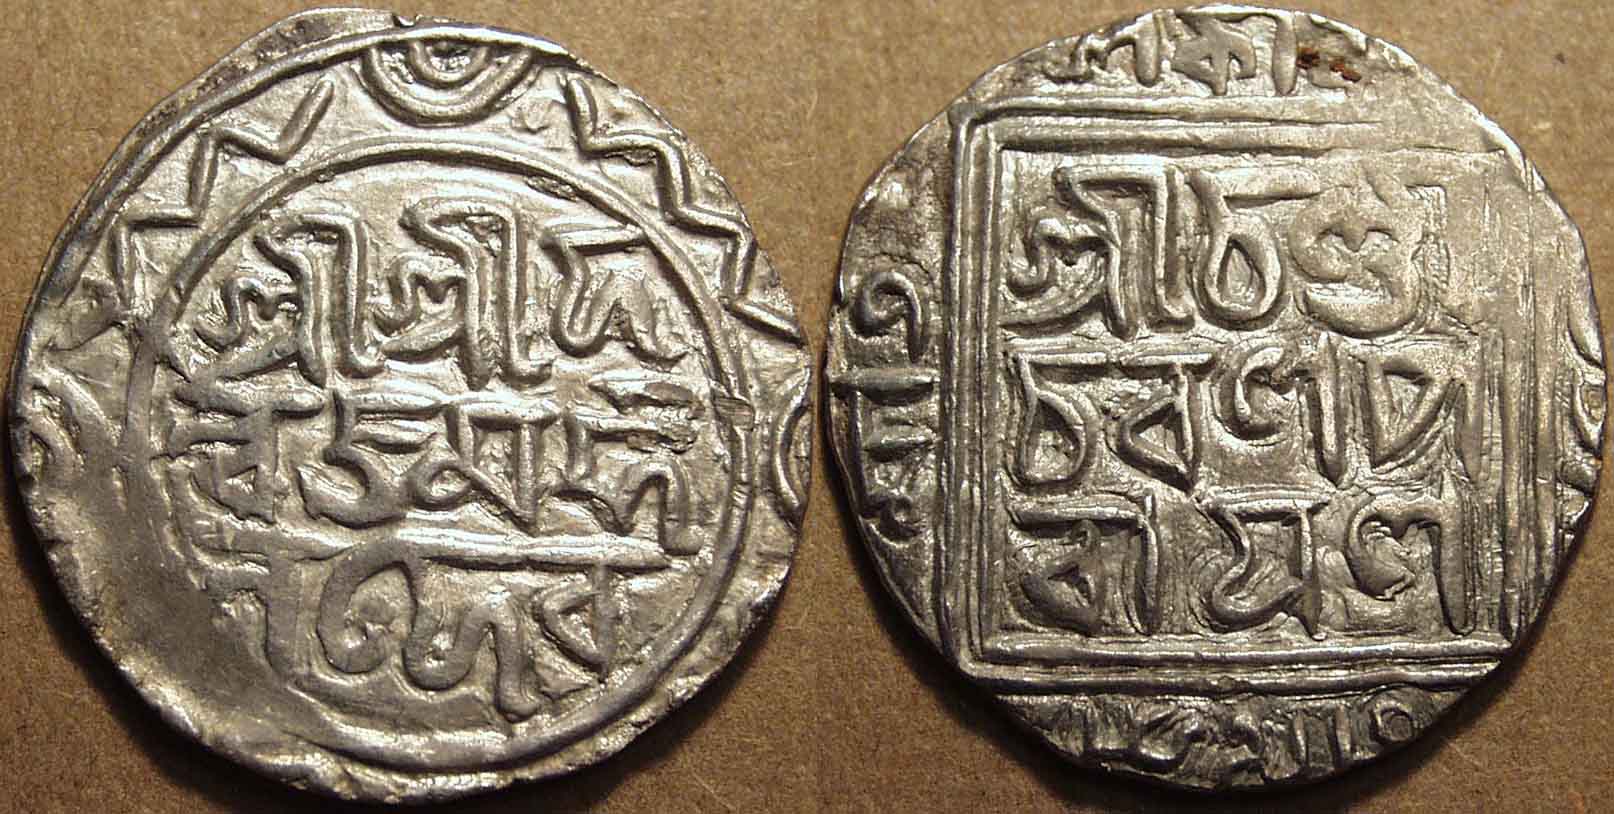 Silver coin of Danujamarddana